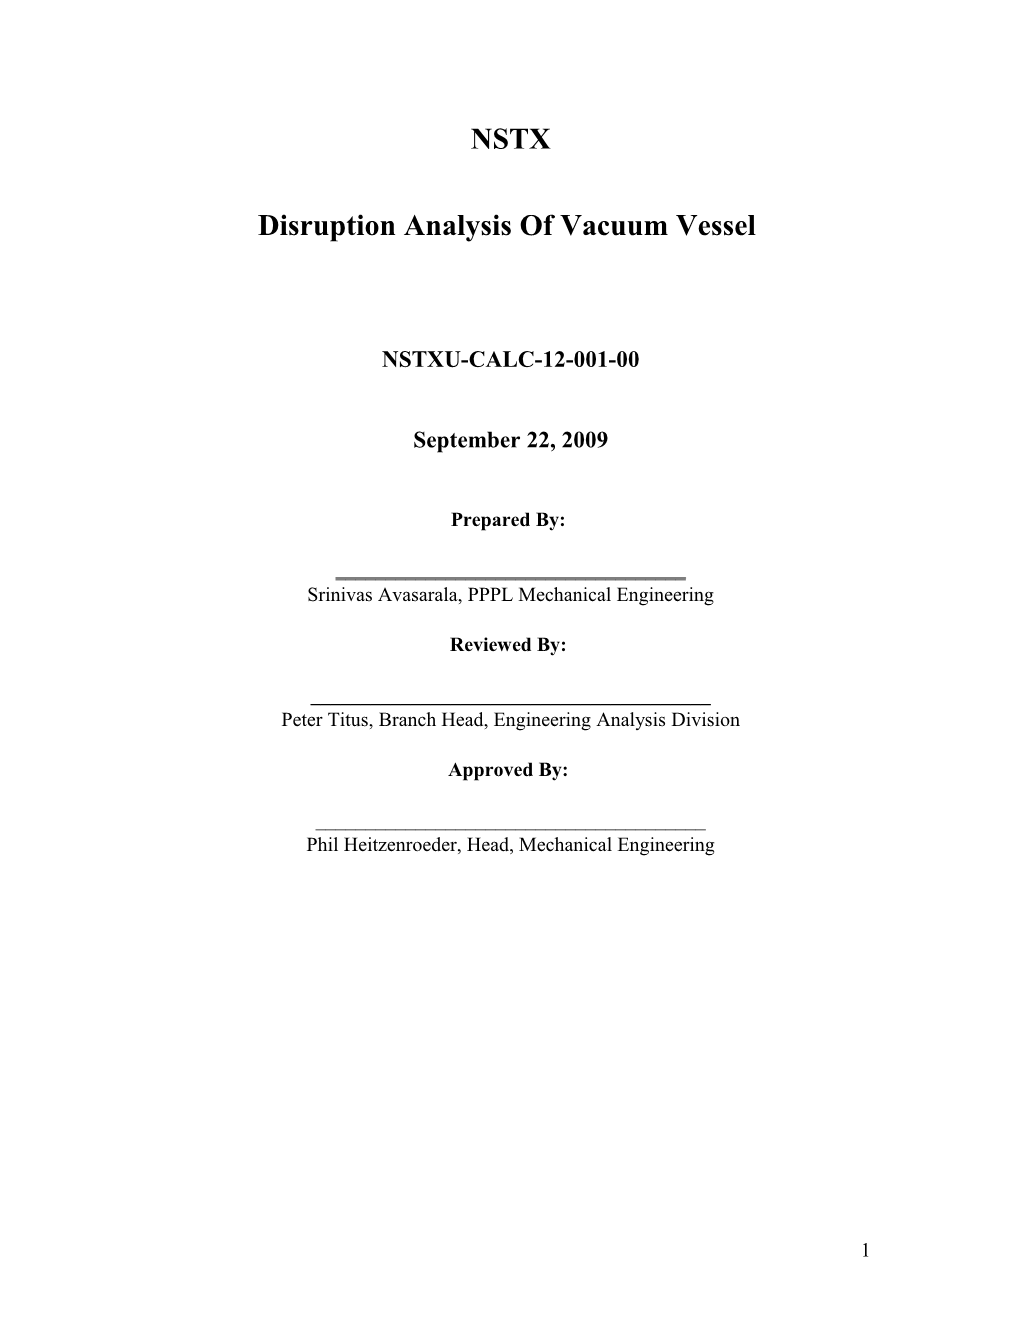 Disruption Analysis of Vacuum Vessel